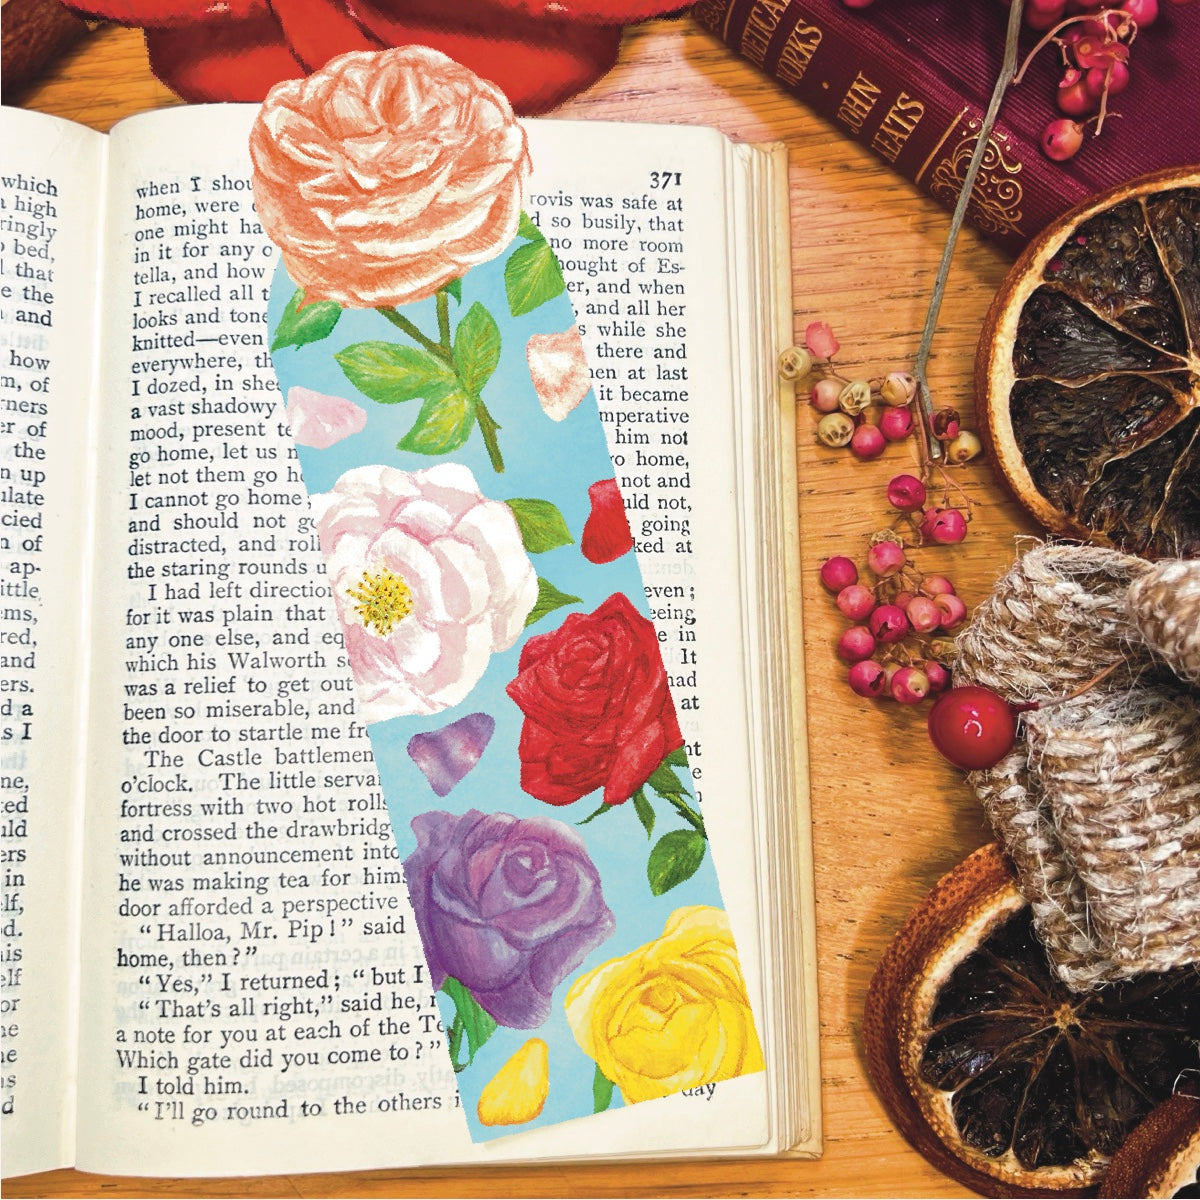 Rose Garden Bookmark Gift Set